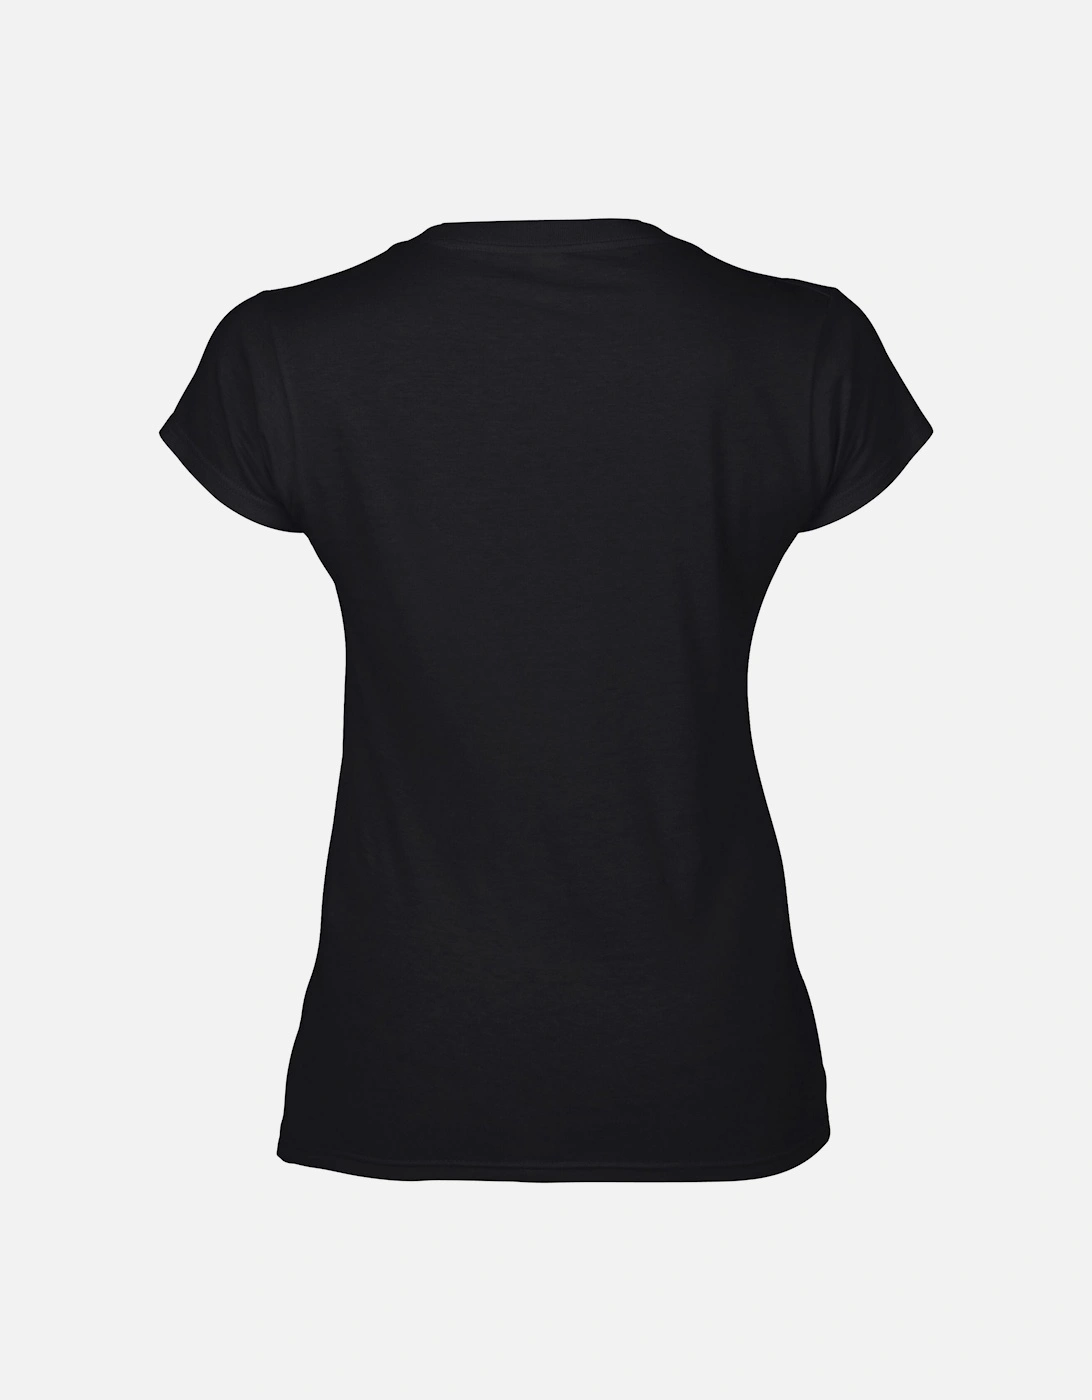 Womens/Ladies Soft Style V Neck T-Shirt